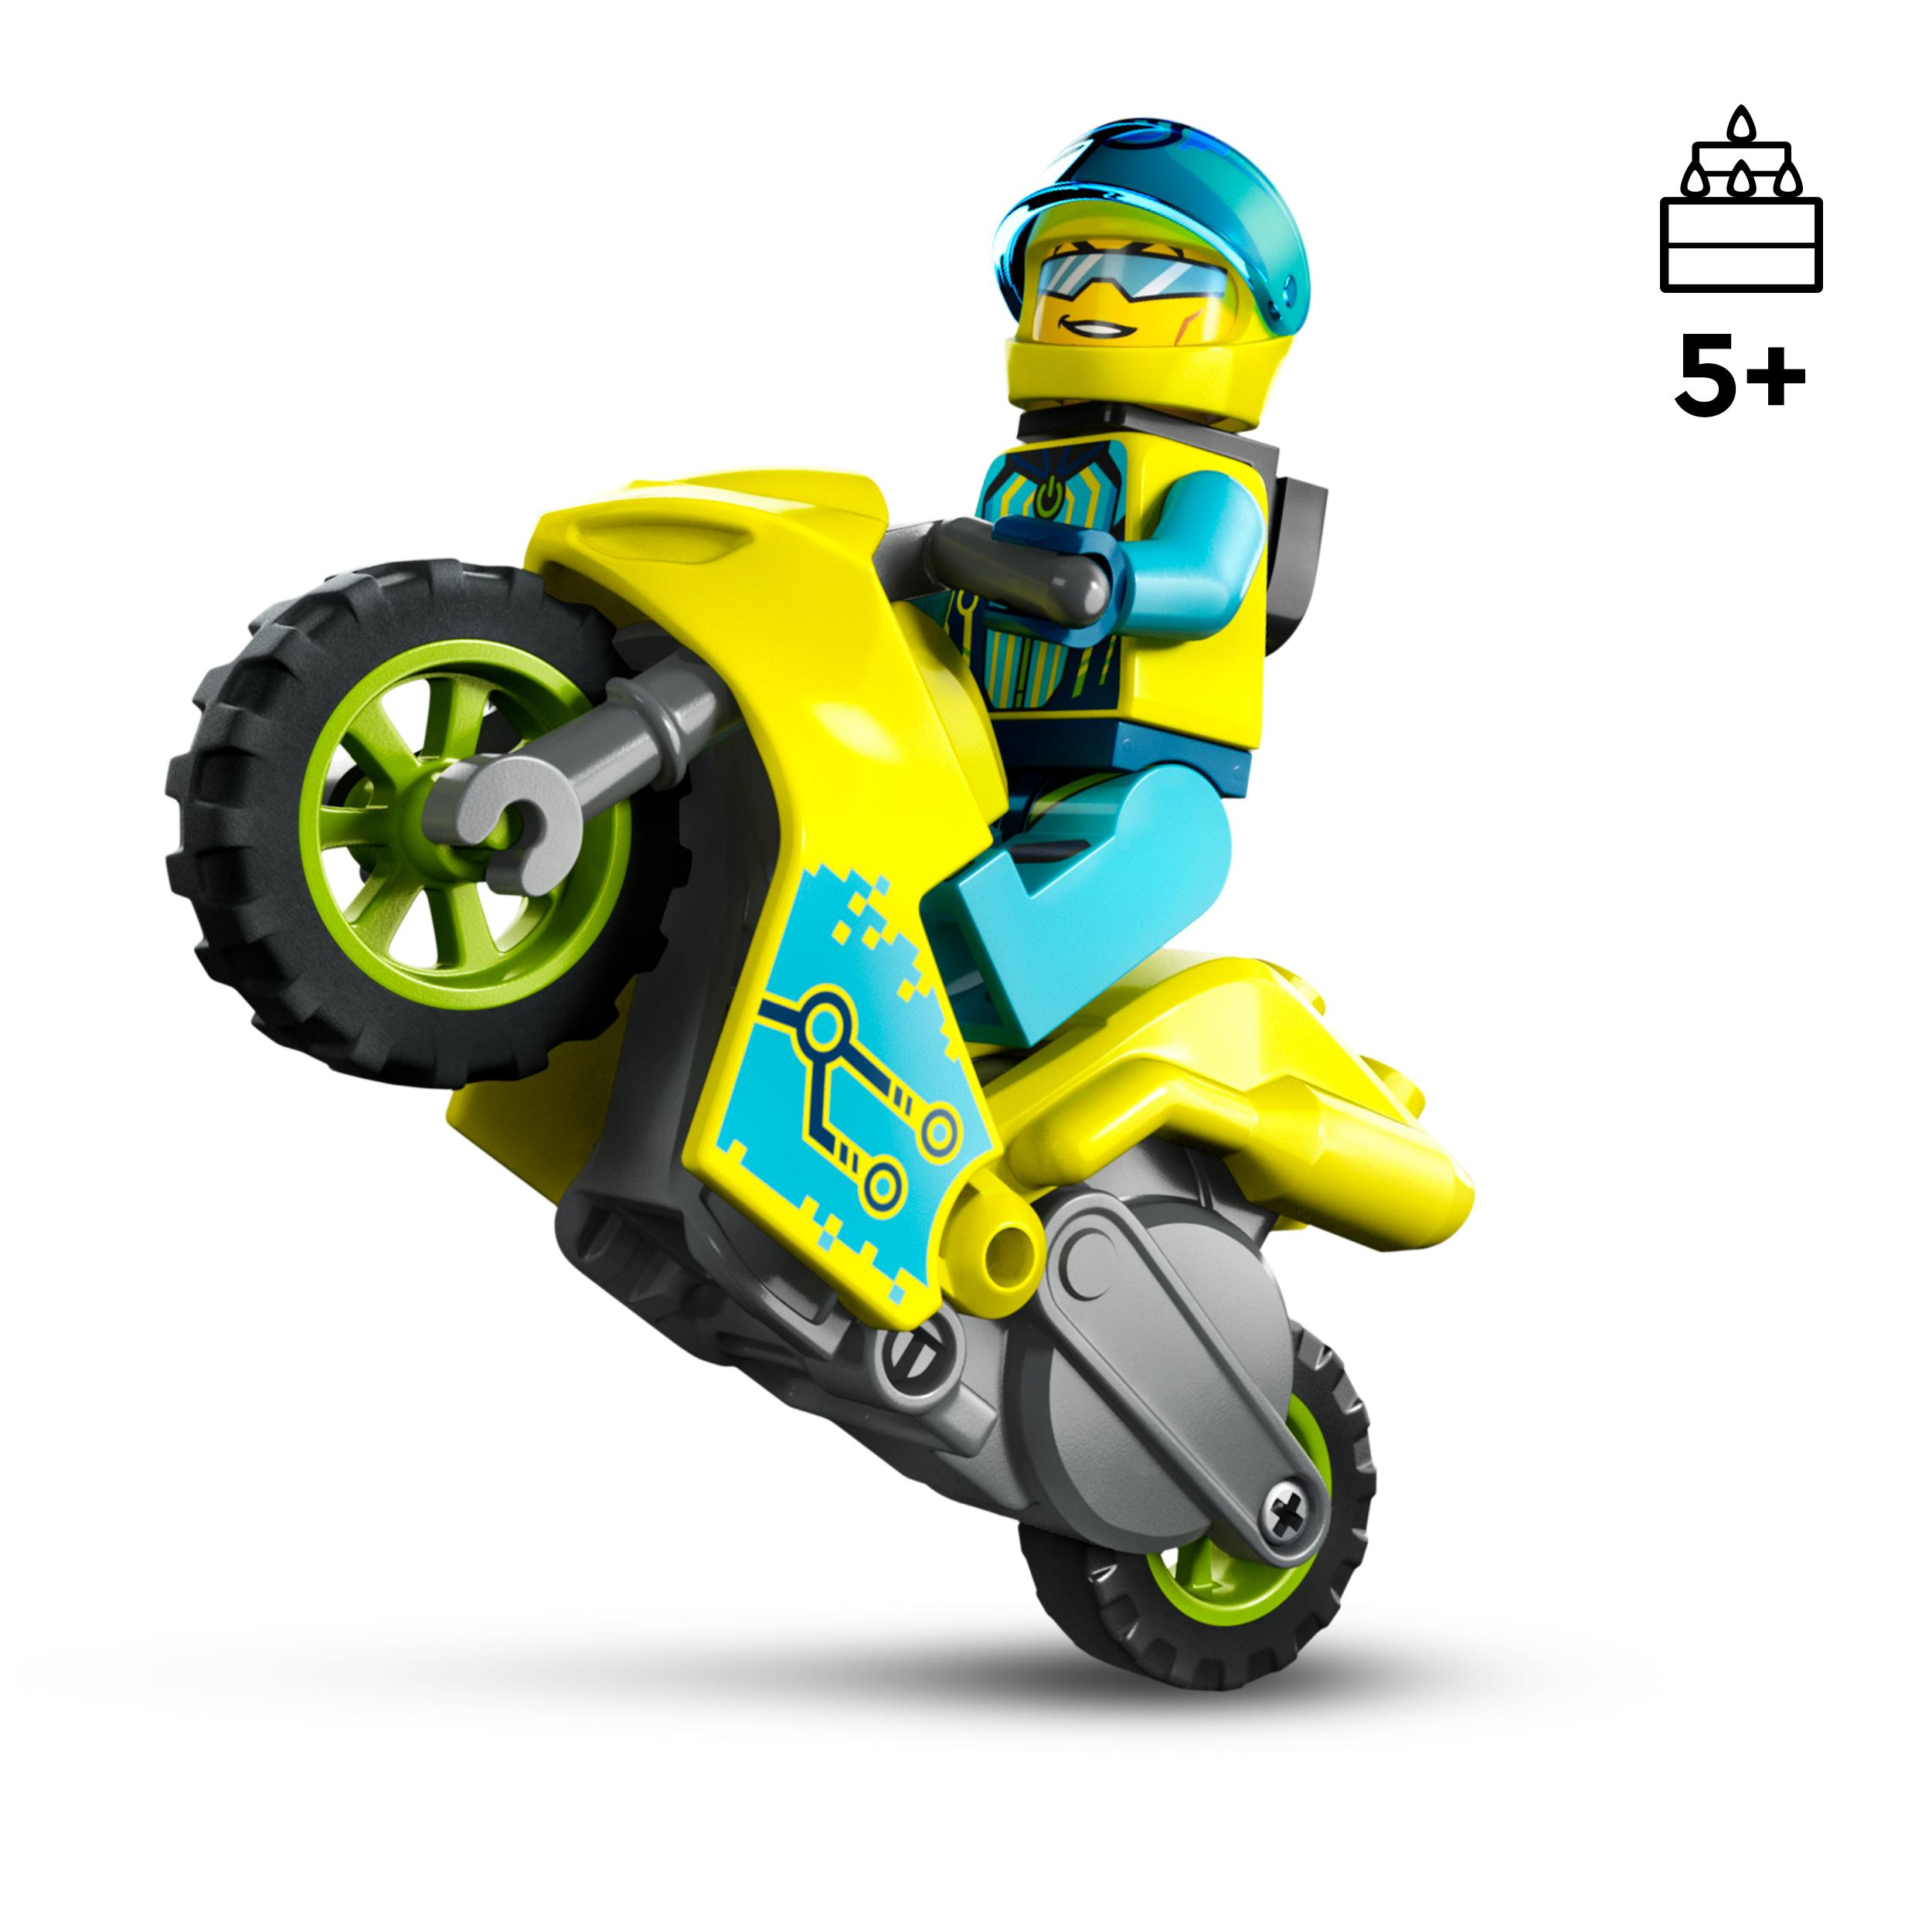 LEGO City 60358 Cyber-Stuntbike Mehrfarbig Bausatz